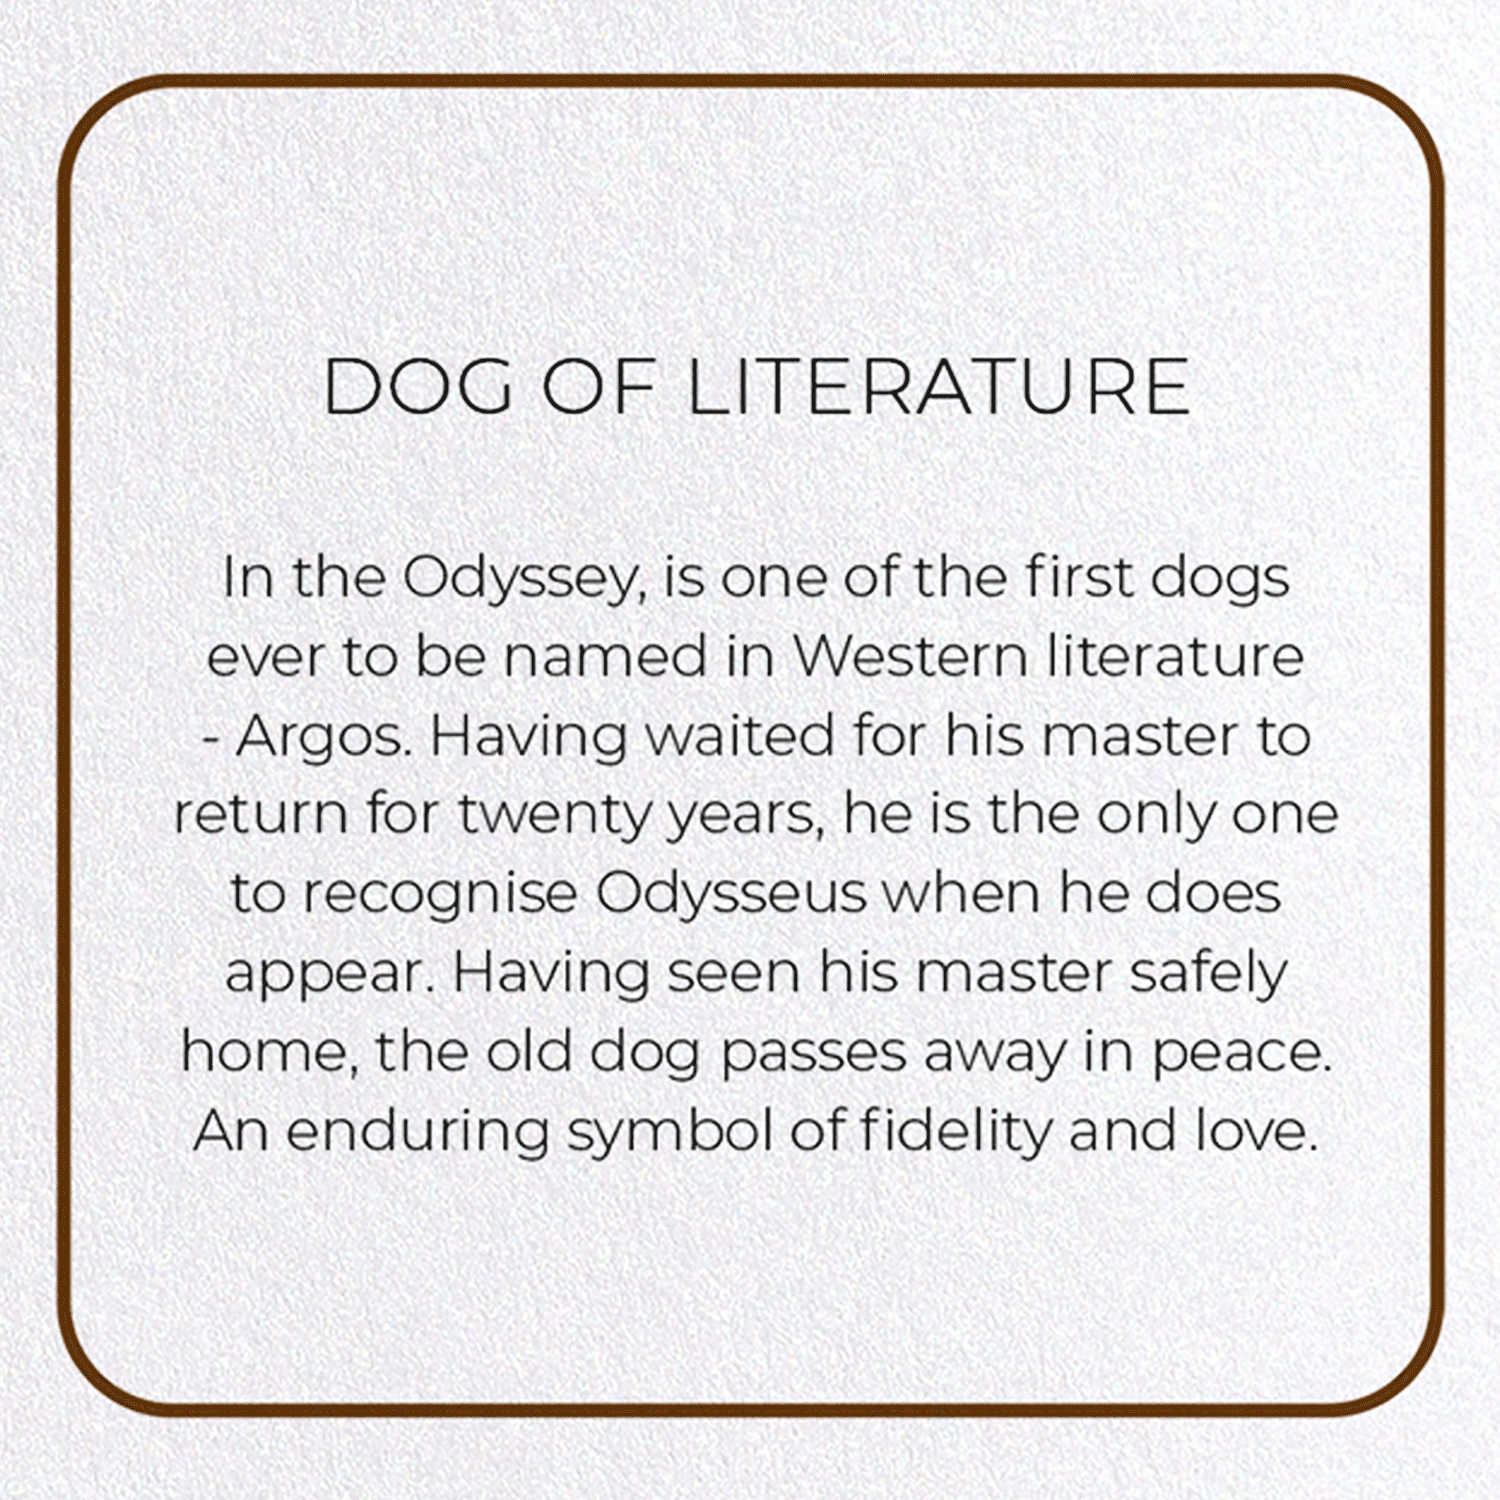 DOG OF LITERATURE